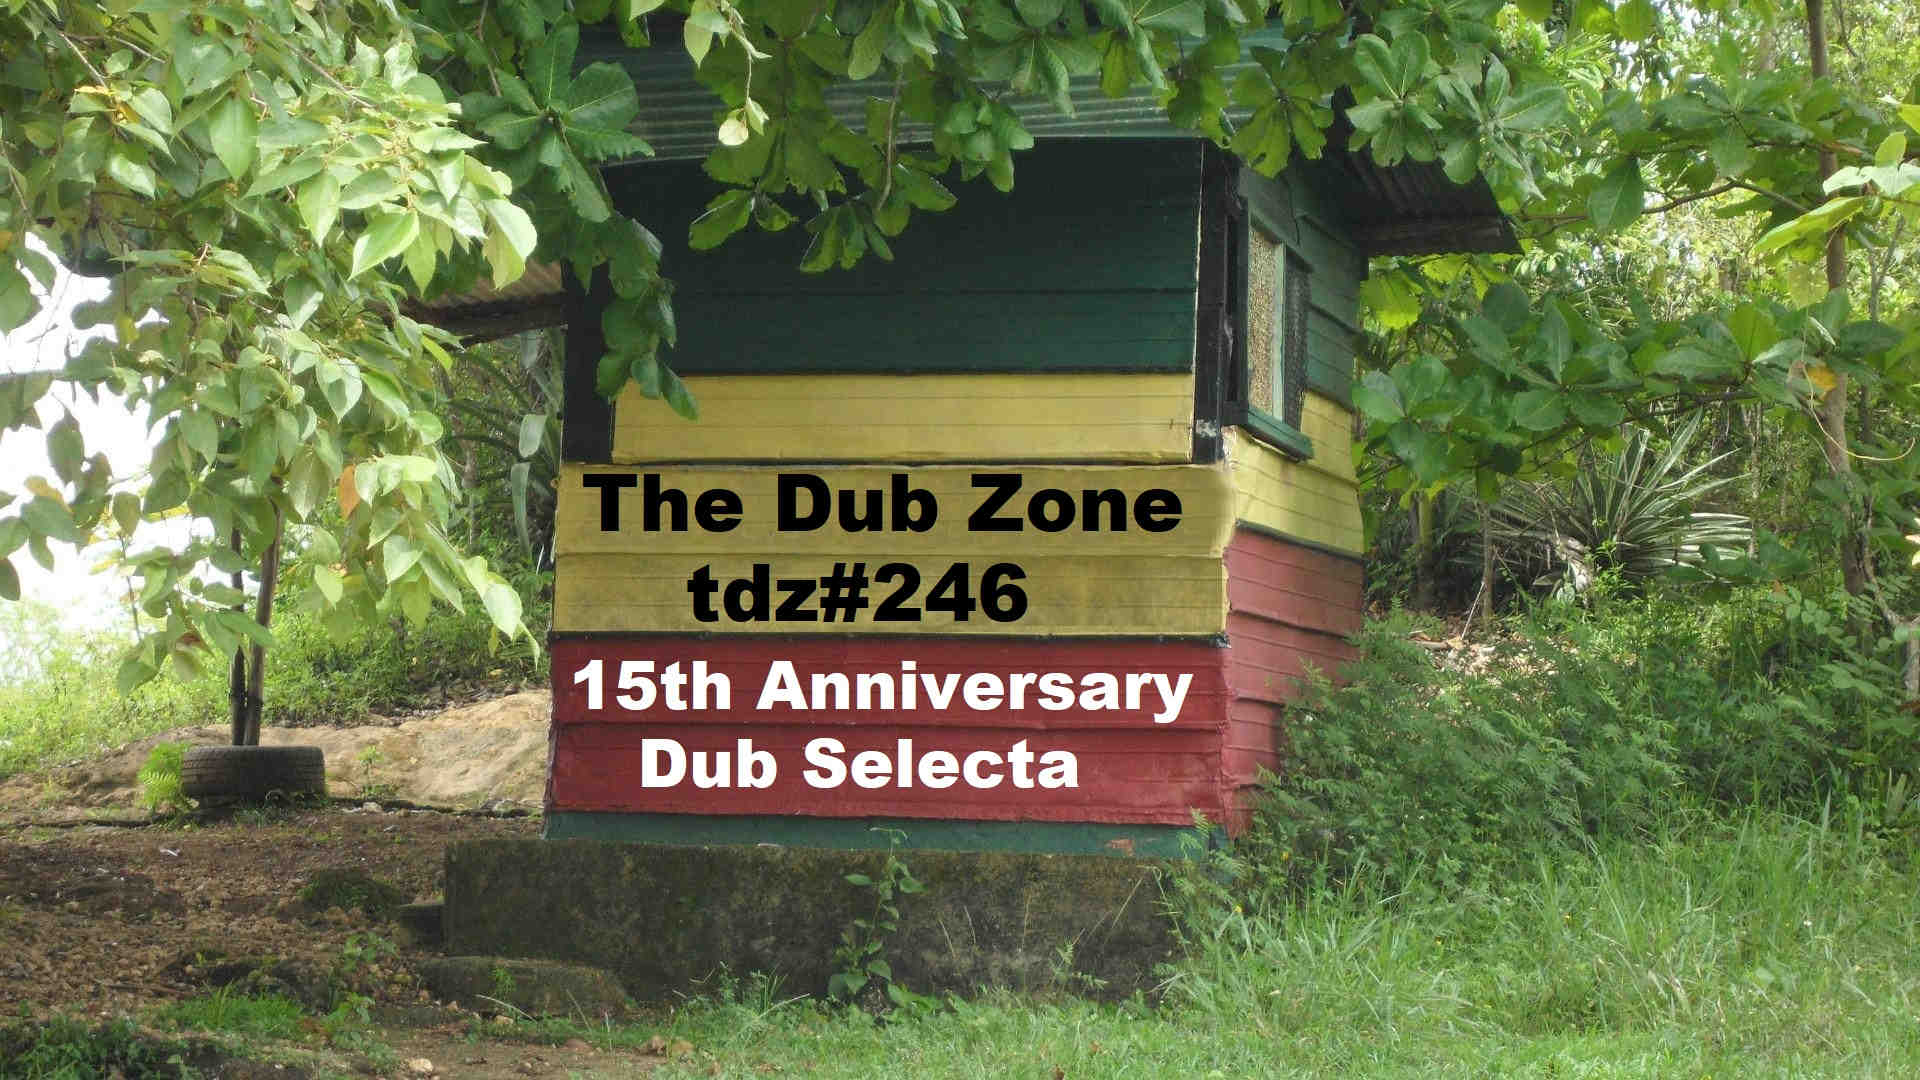 TDZ#246... 15th Anniversary Dub Selecta.....